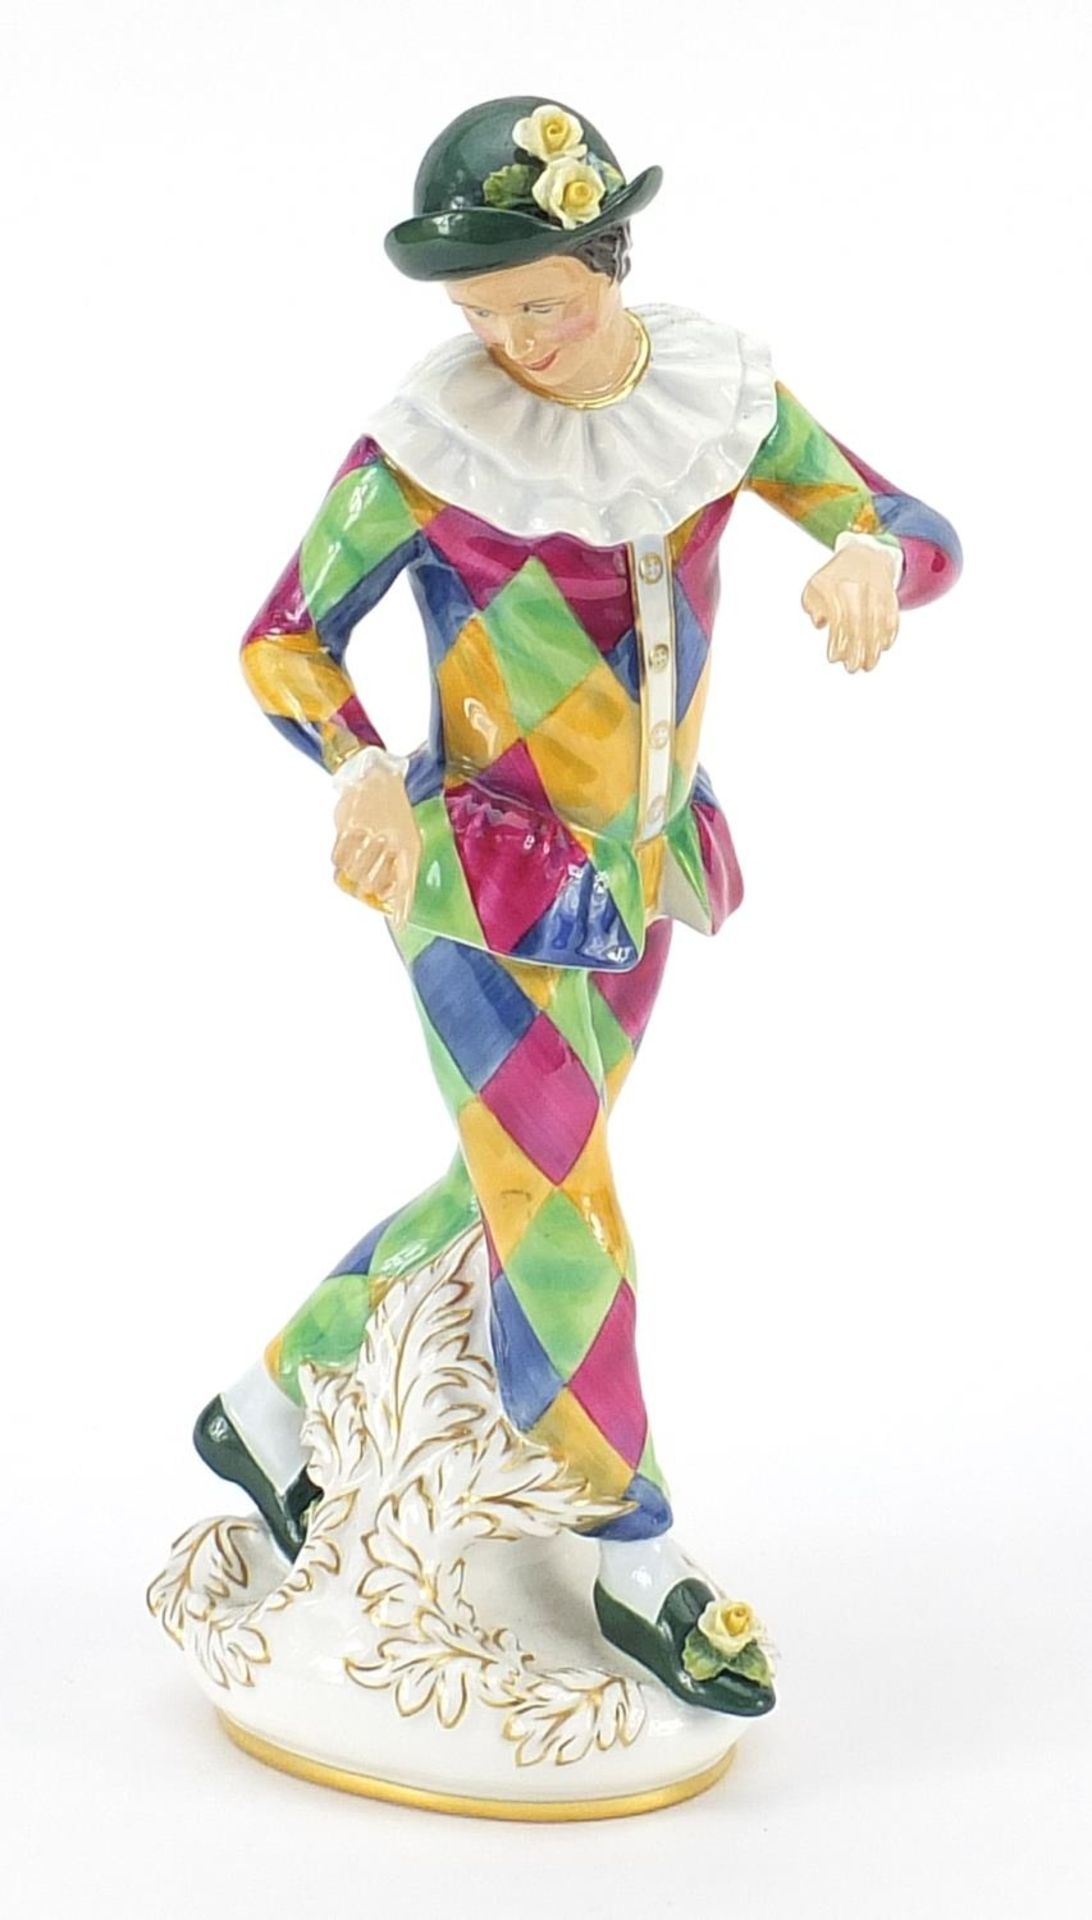 Royal Doulton Harlequin figurine HN2737, 32.5cm high